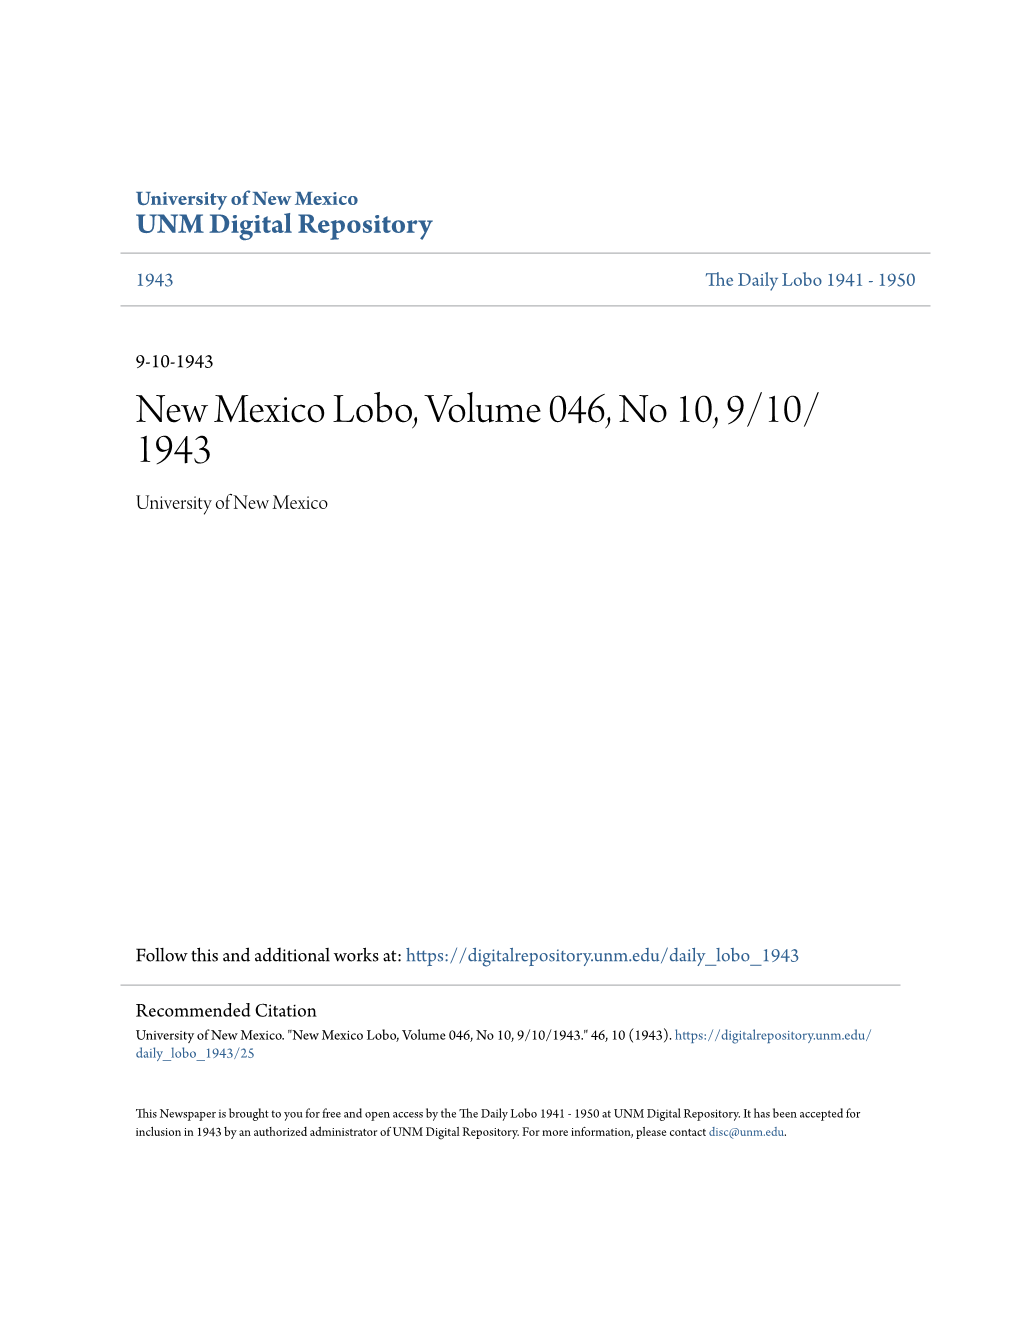 New Mexico Lobo, Volume 046, No 10, 9/10/1943." 46, 10 (1943)